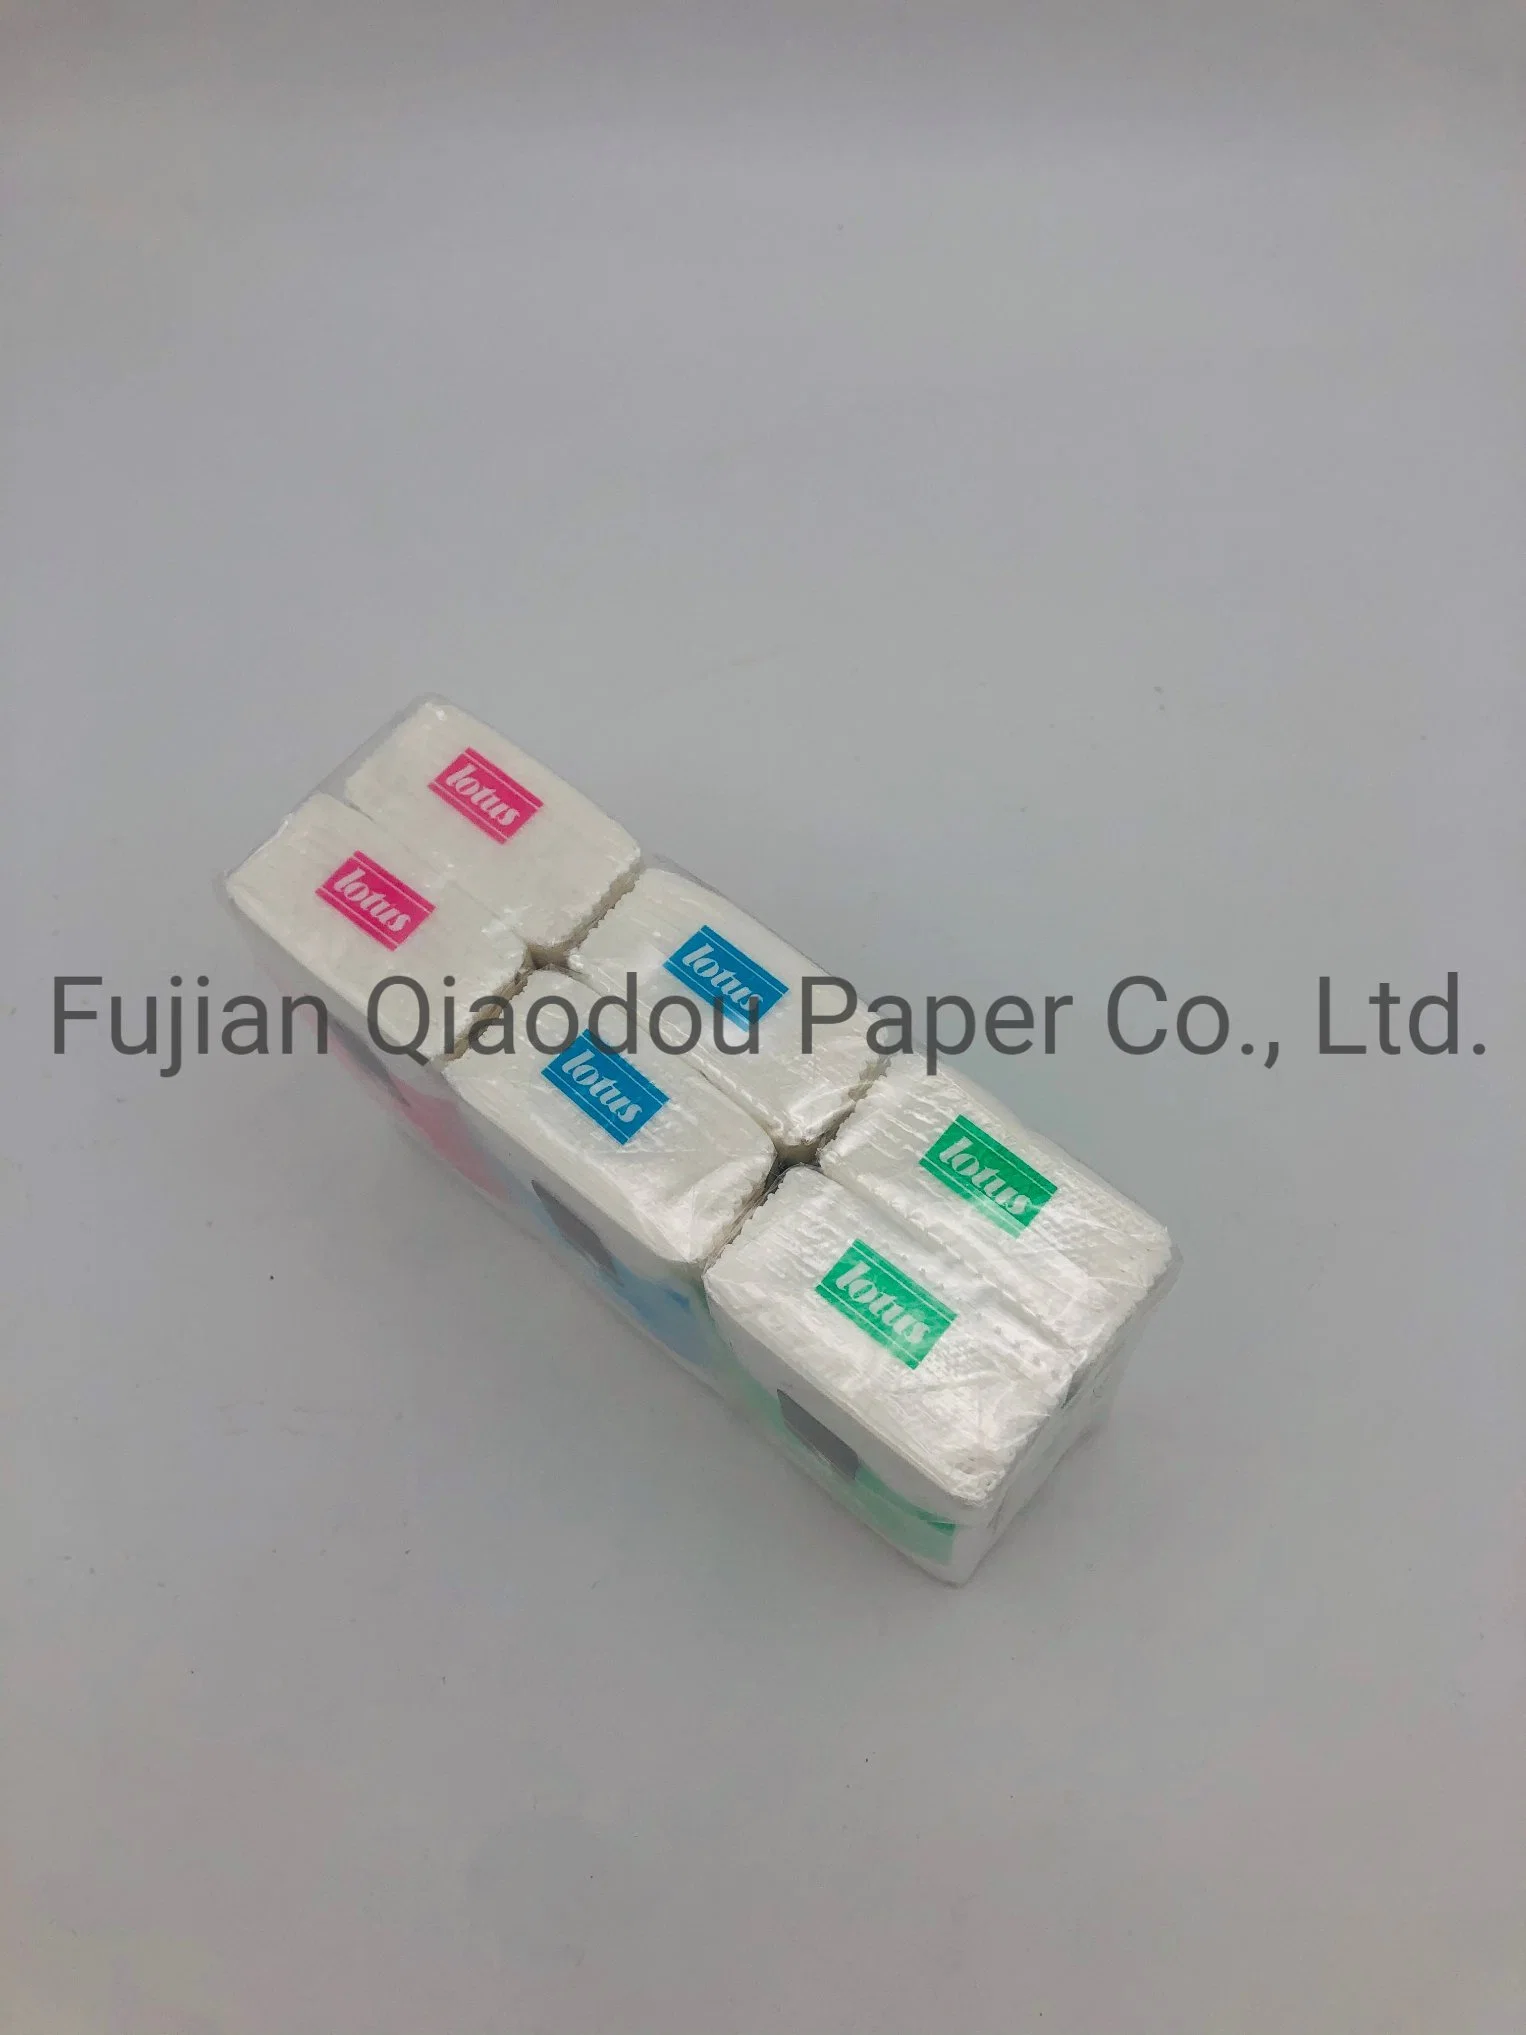 Qiaodou 2 Ply Mini Pocket Tissue Wood Pulp Paper Handkerchief